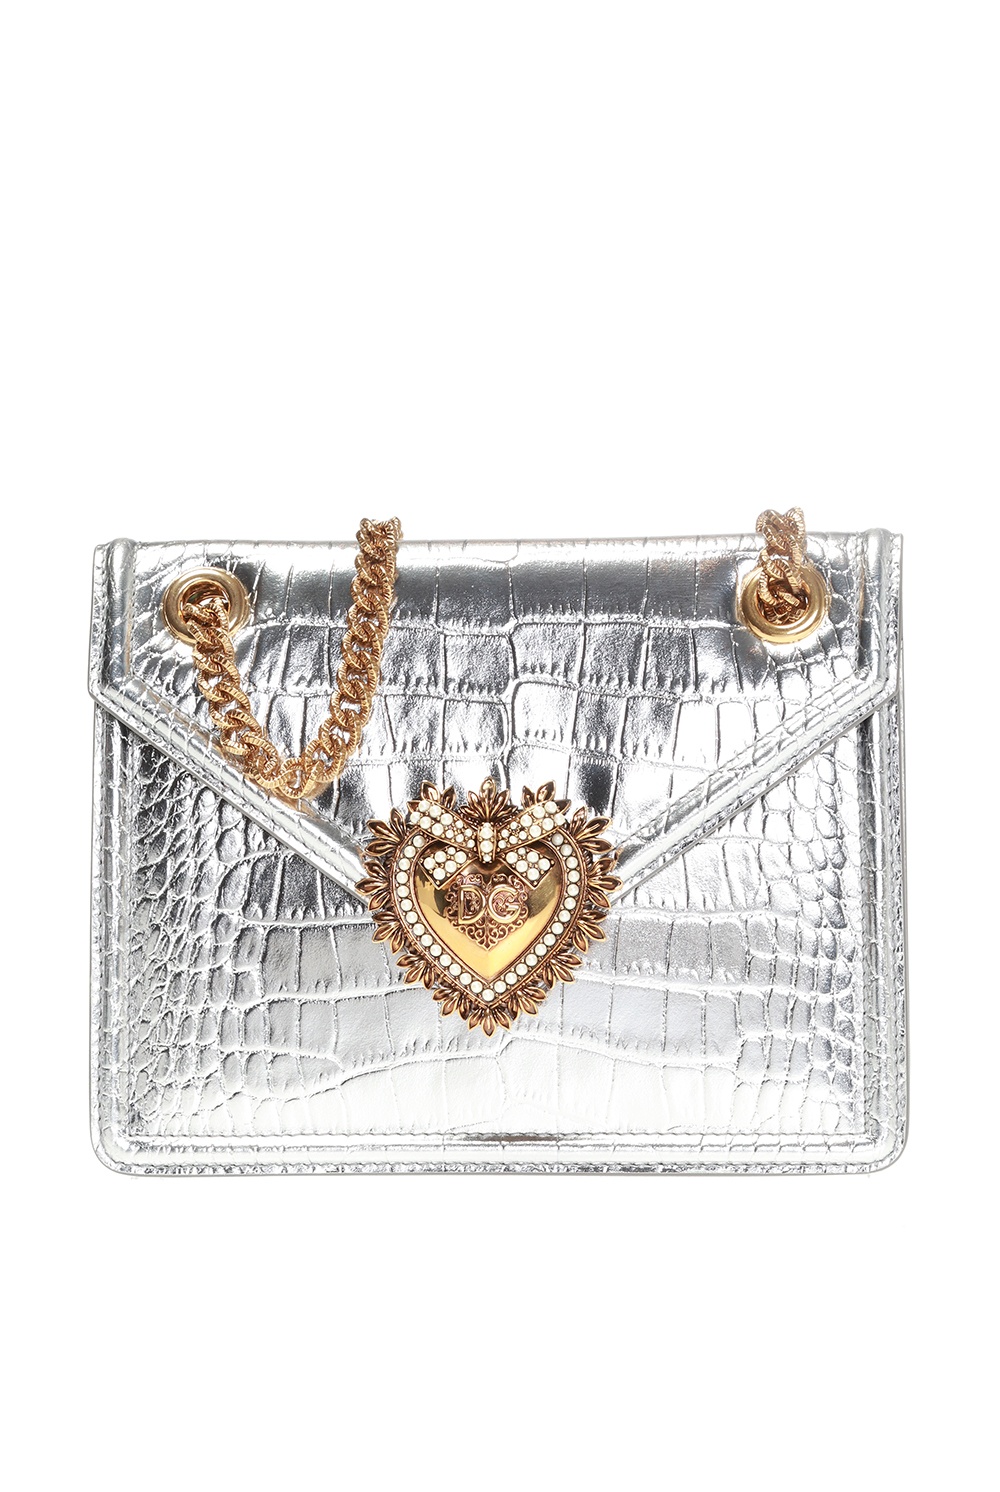 Dolce & Gabbana White Leather Gold Heart Devotion Small Shoulder Purse in  Metallic